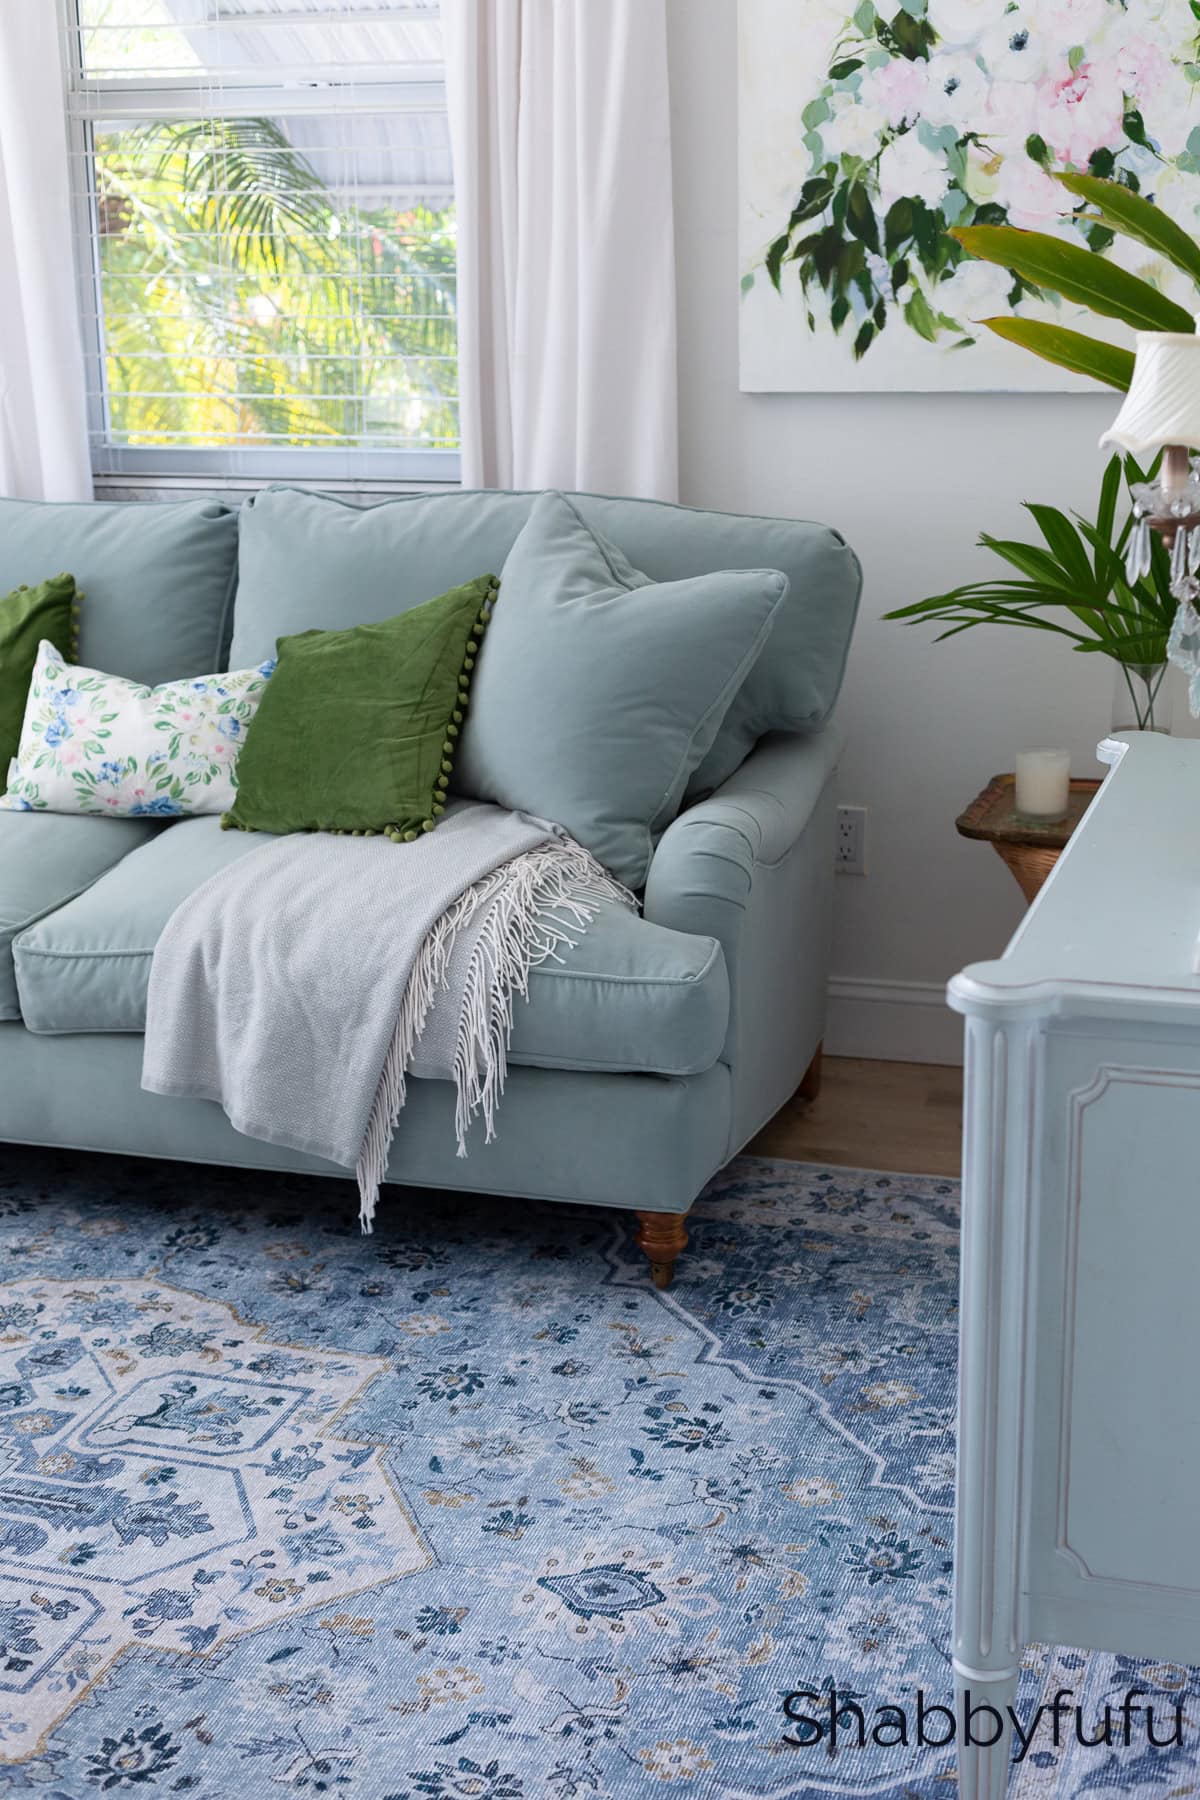 Living Room & Patio Decorating Ideas, A Spritzer Recipe & More! Home Style Saturdays 409